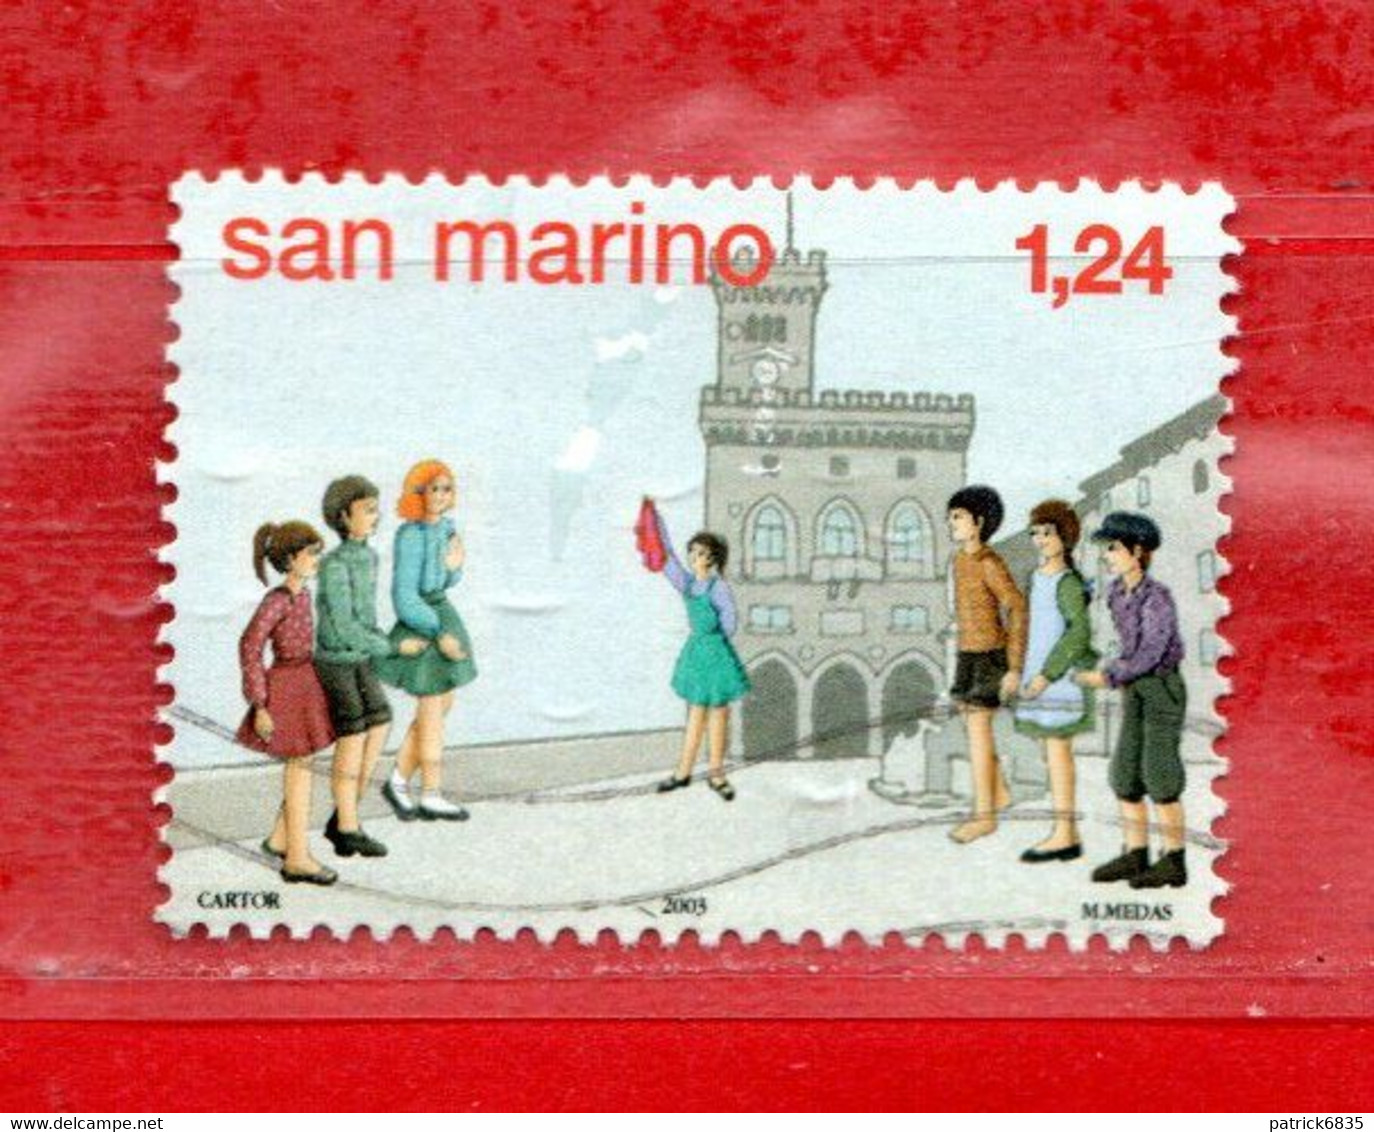 San Marino ° 2003 - AMARCORD - Antichi Giochi Giovanili. Unif. 1952. Usato - Gebraucht